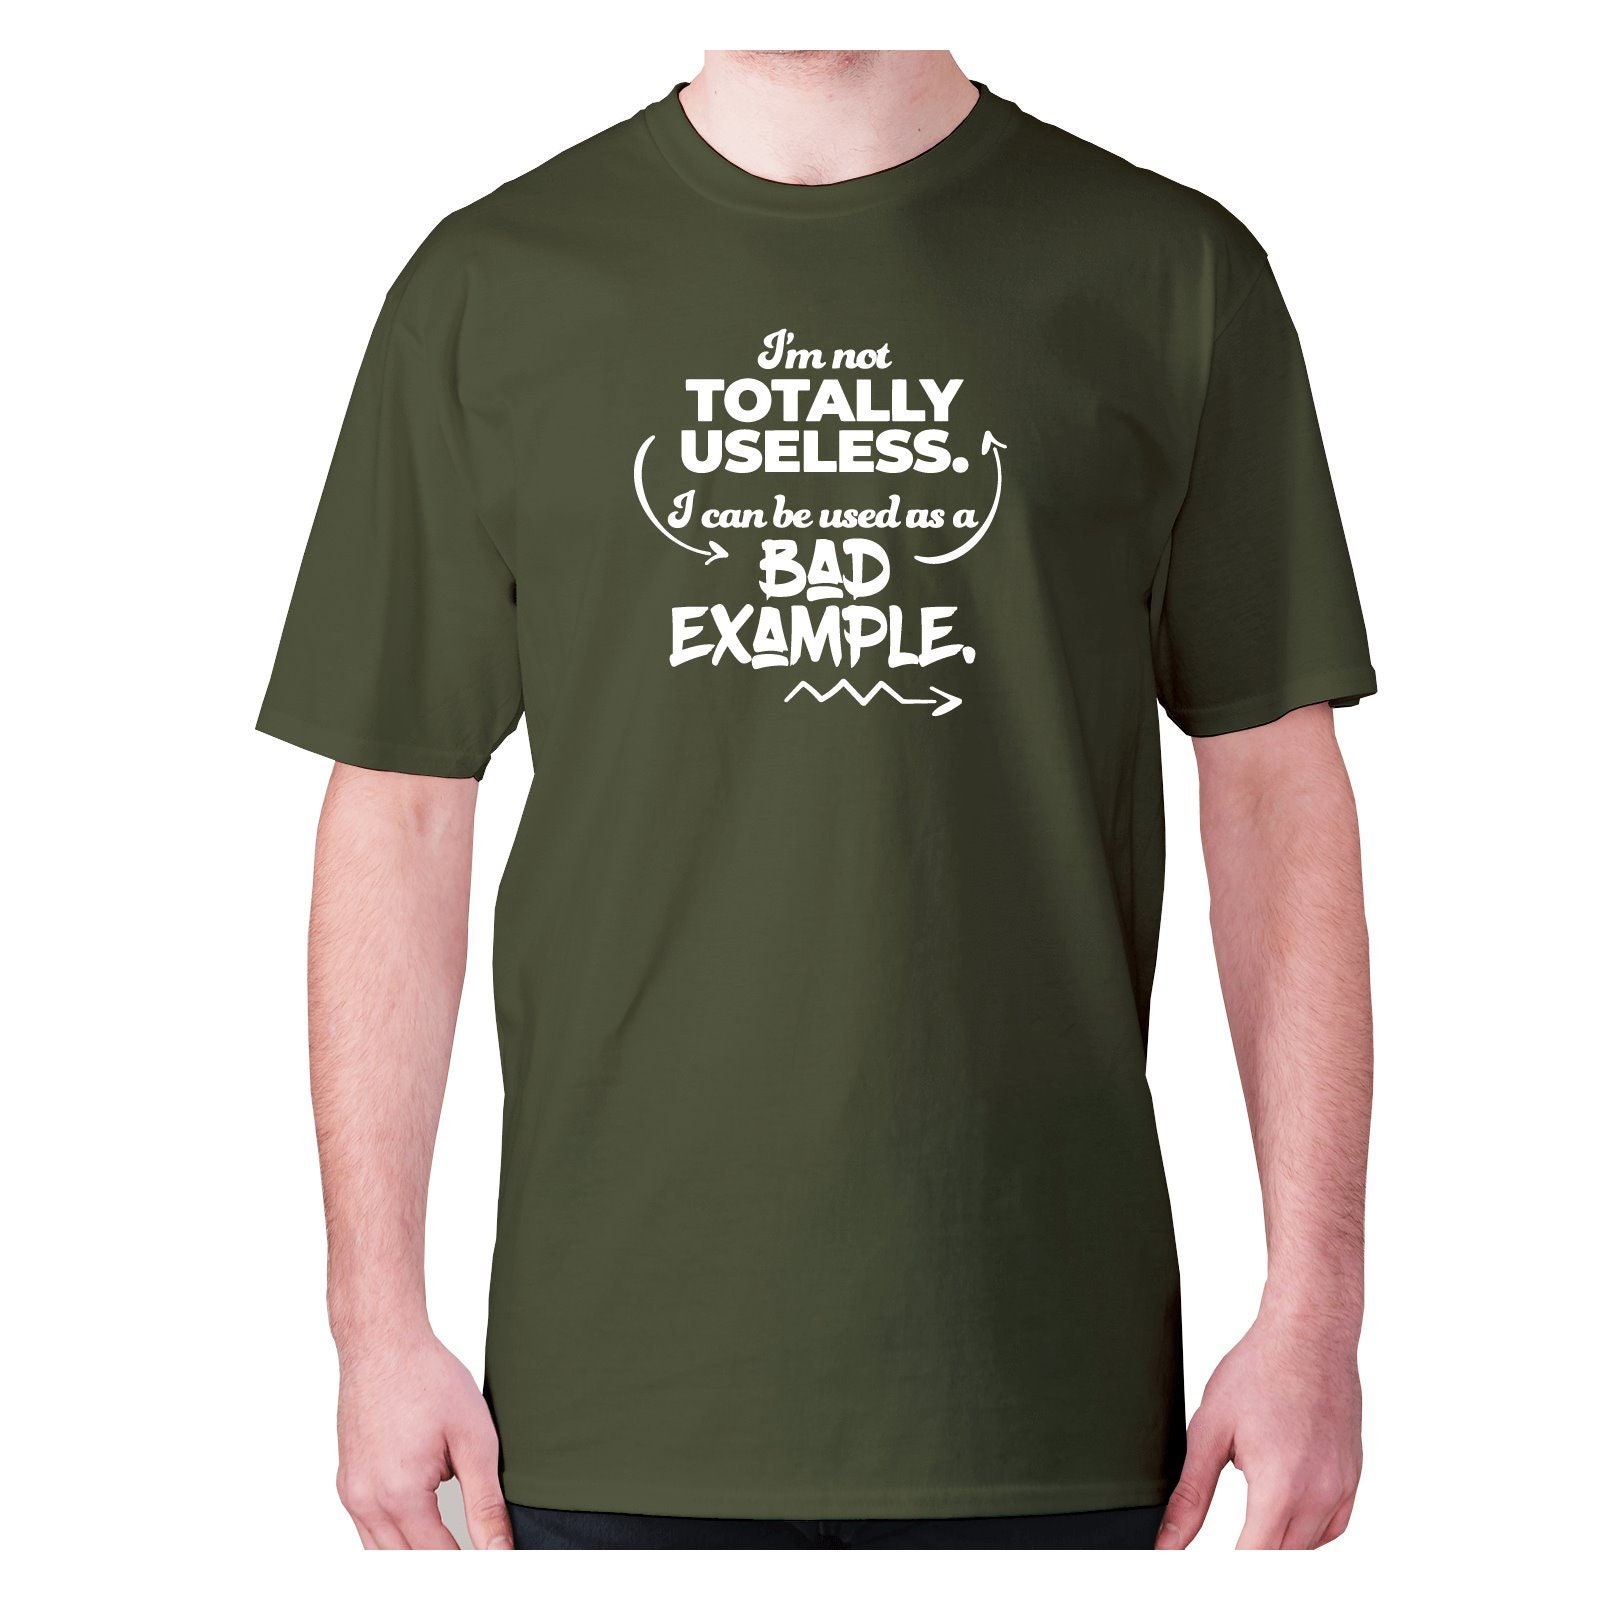 Mens funny t-shirt slogan tee novelty humour hilarious | Etsy